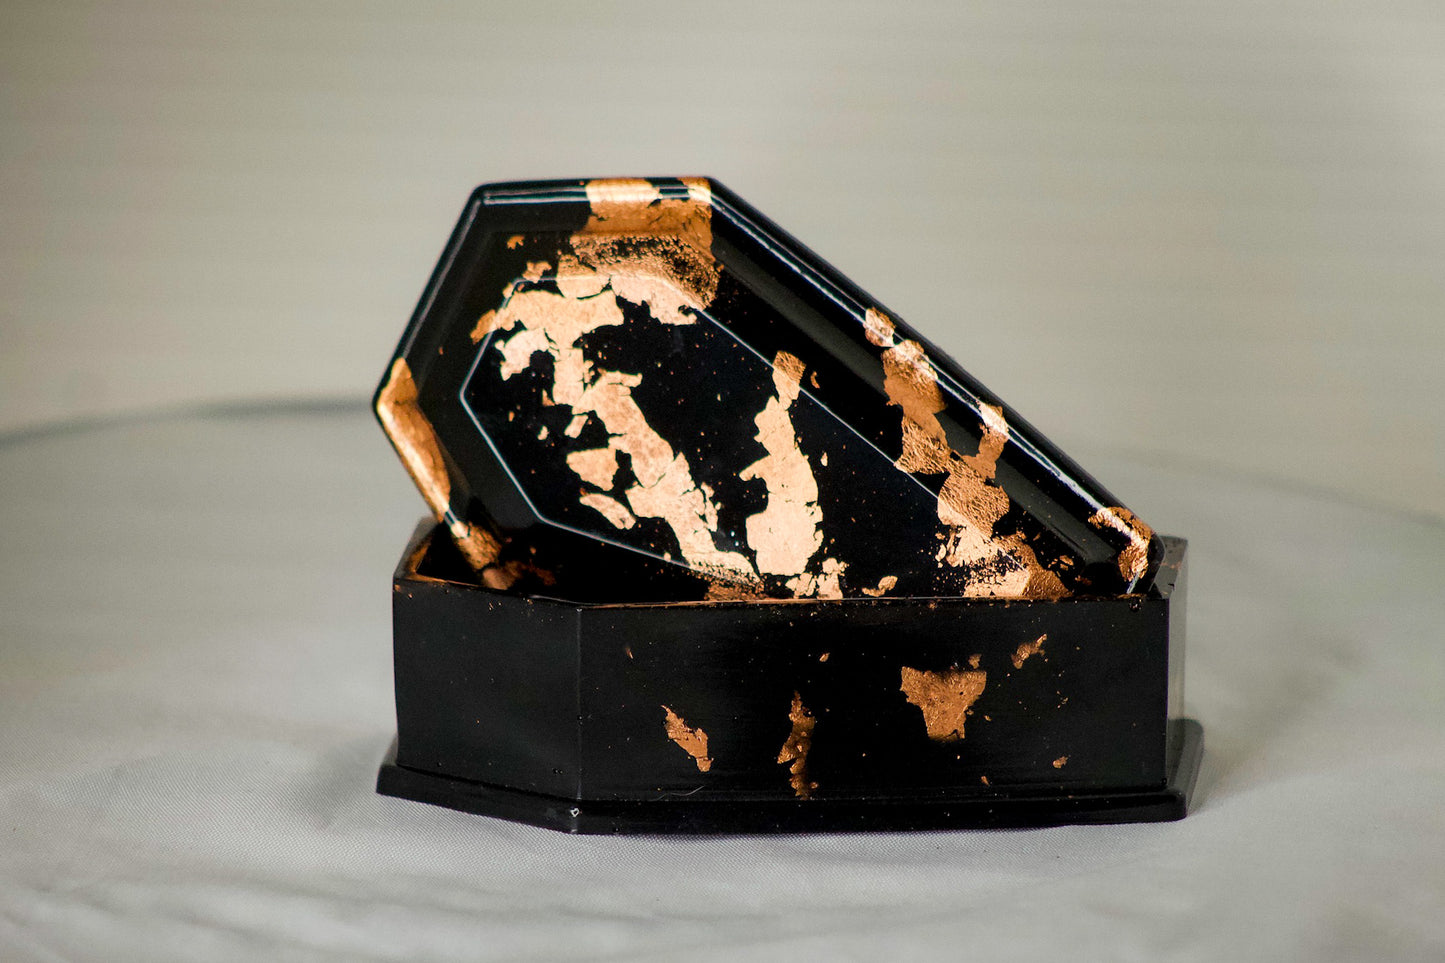 Black Resin Coffin Trinket Box by Gravely Goods